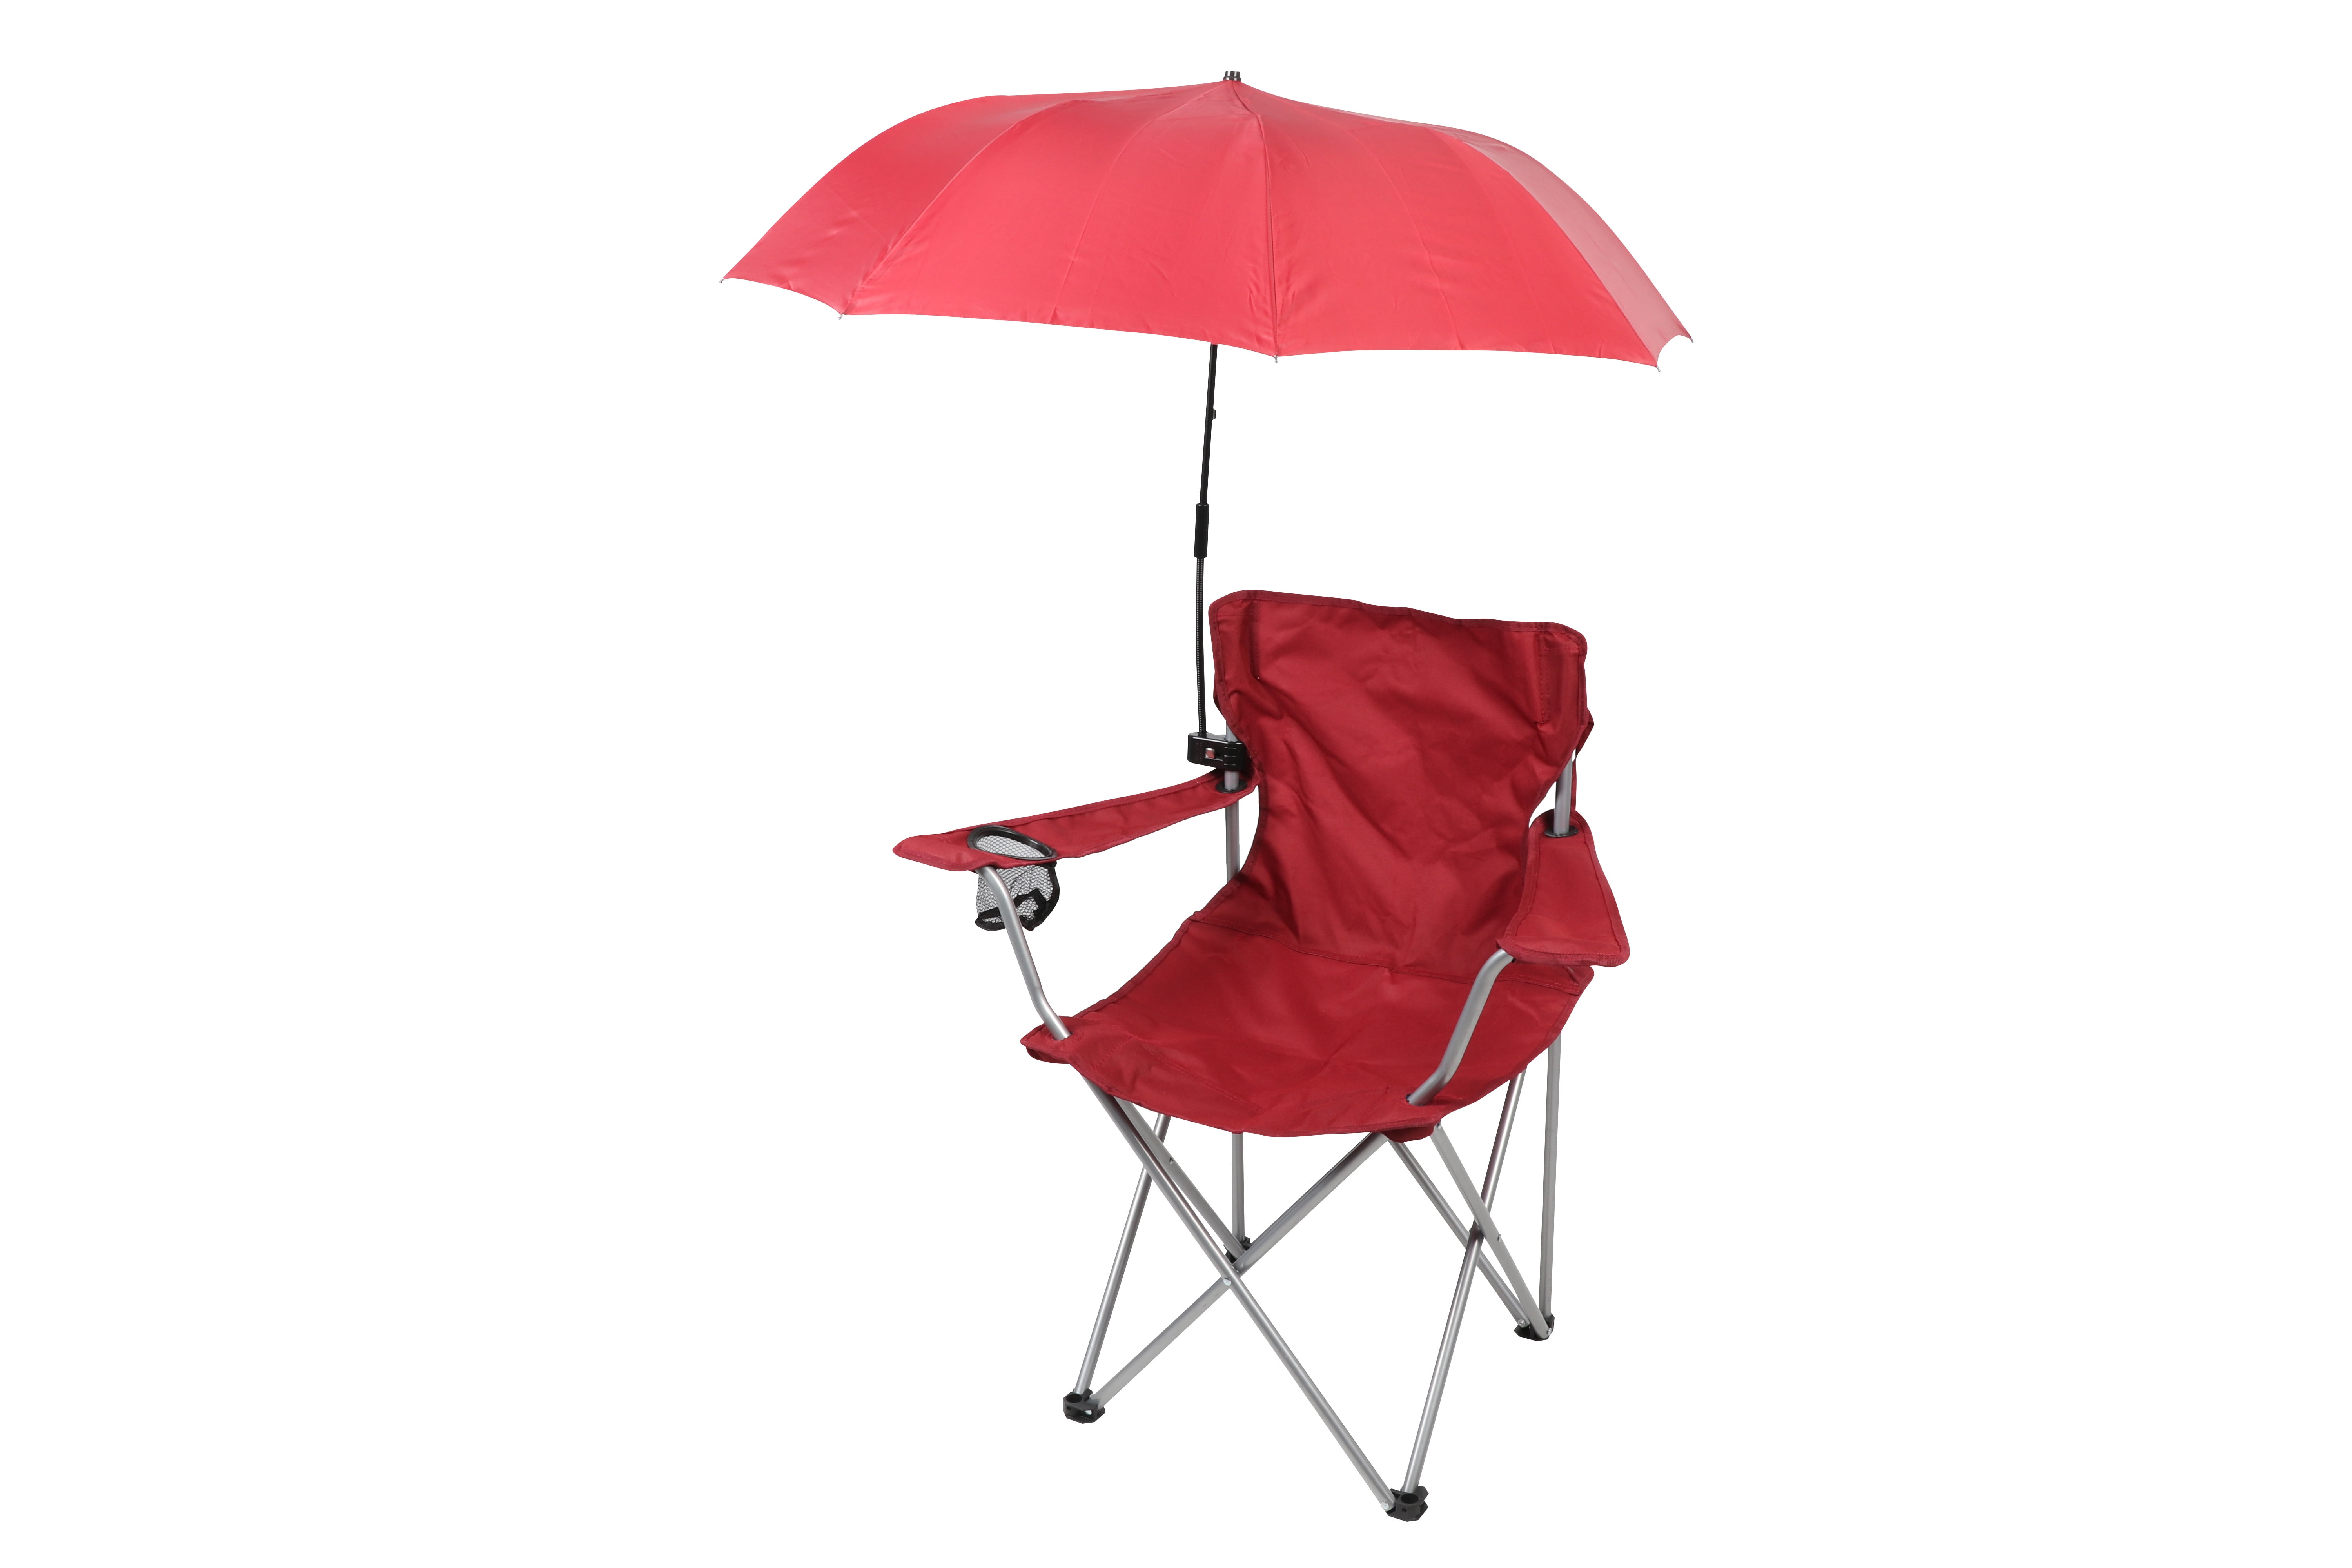 Ozark Trail Regular Chair Umbrella with Universal Clamp, Red - Walmart.com